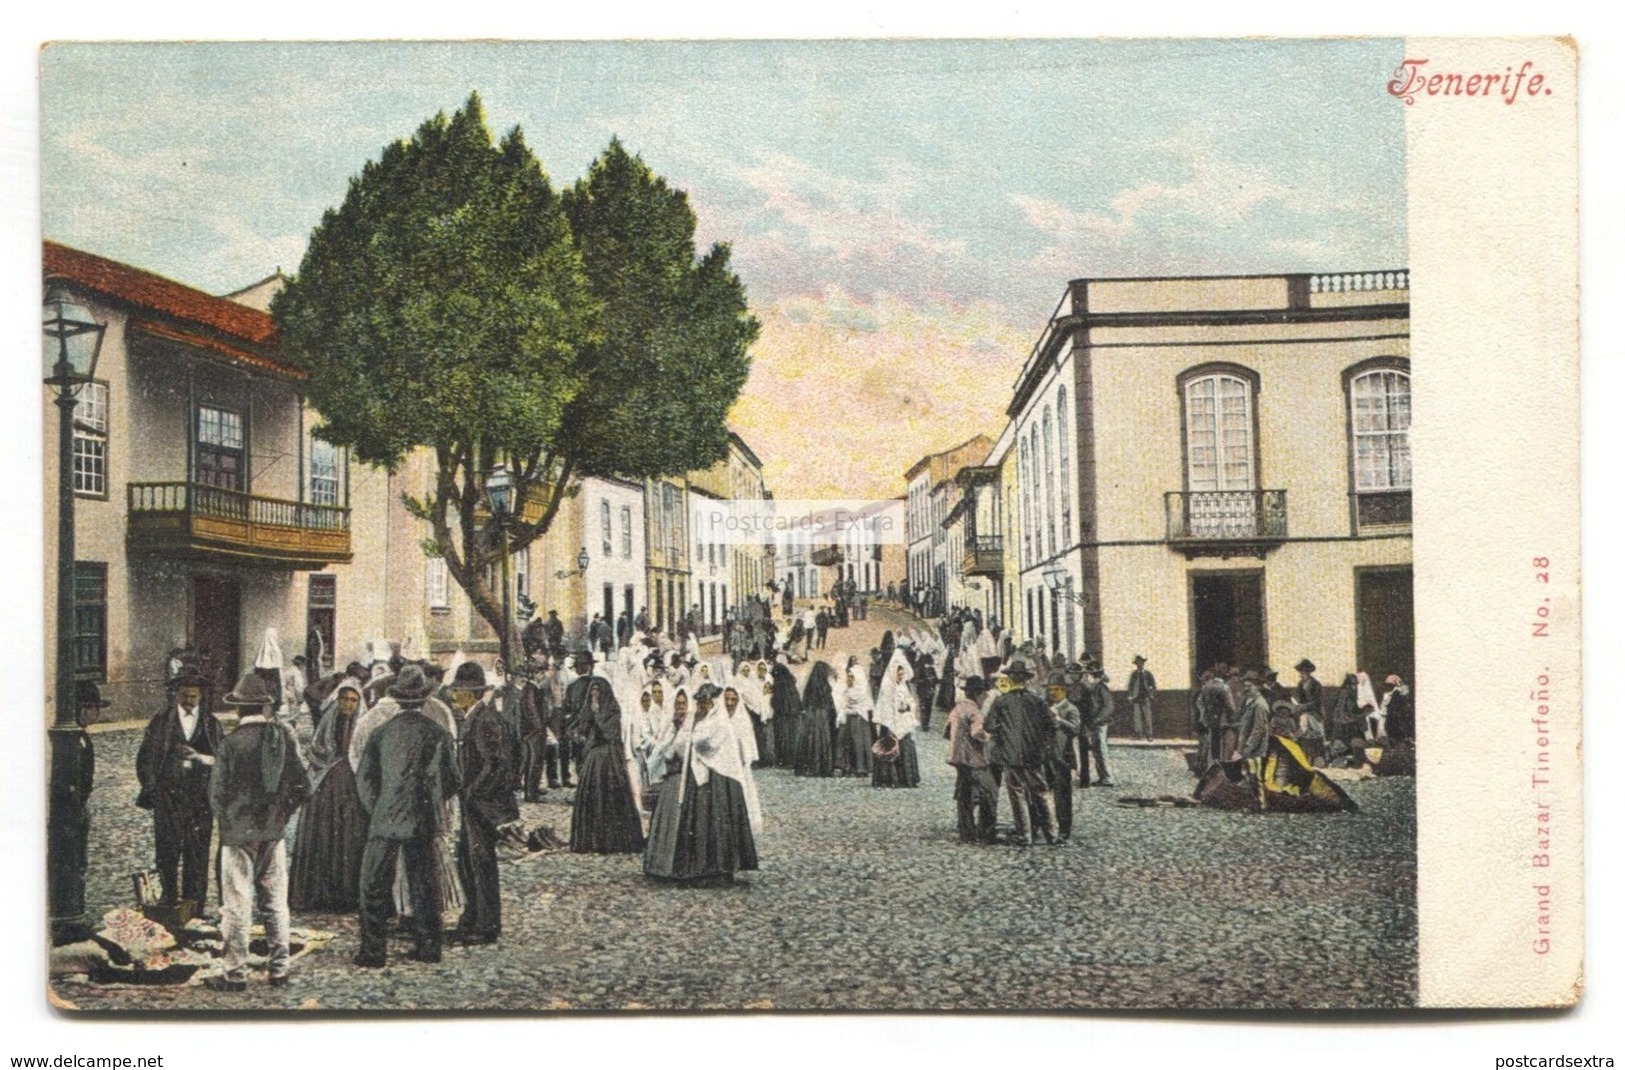 Tenerife - Street Scene, Market - Early Postcard Published By Grand Bazar Tinerfeno - Tenerife